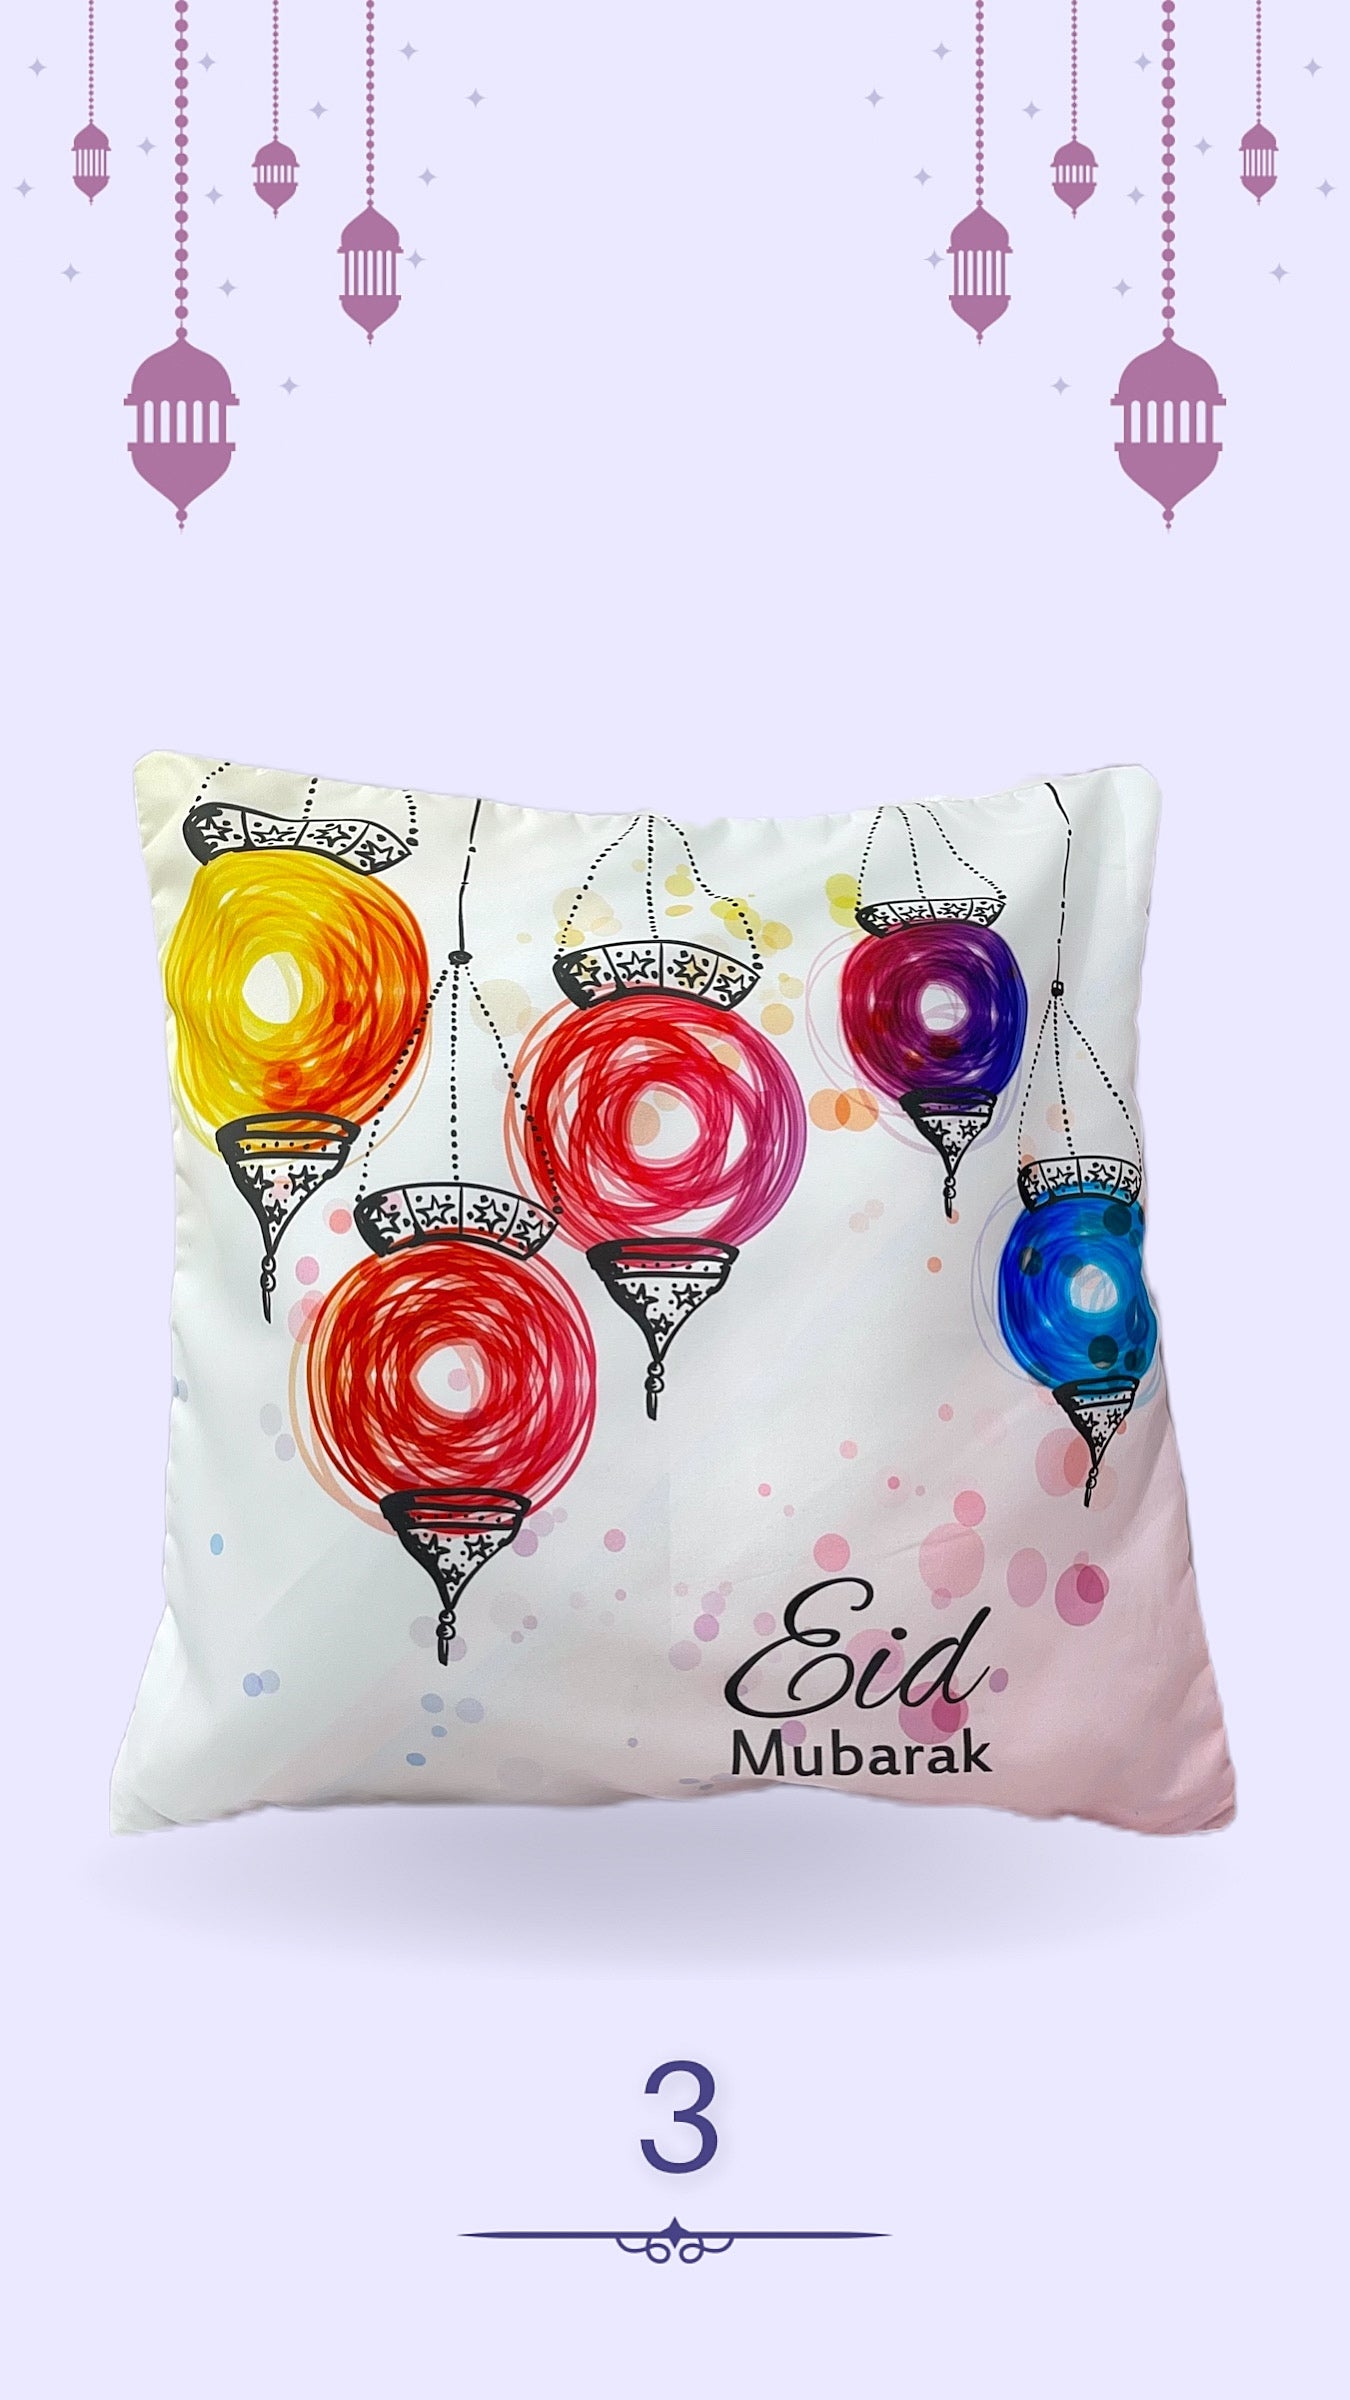 Eid Mubarak cushion cover